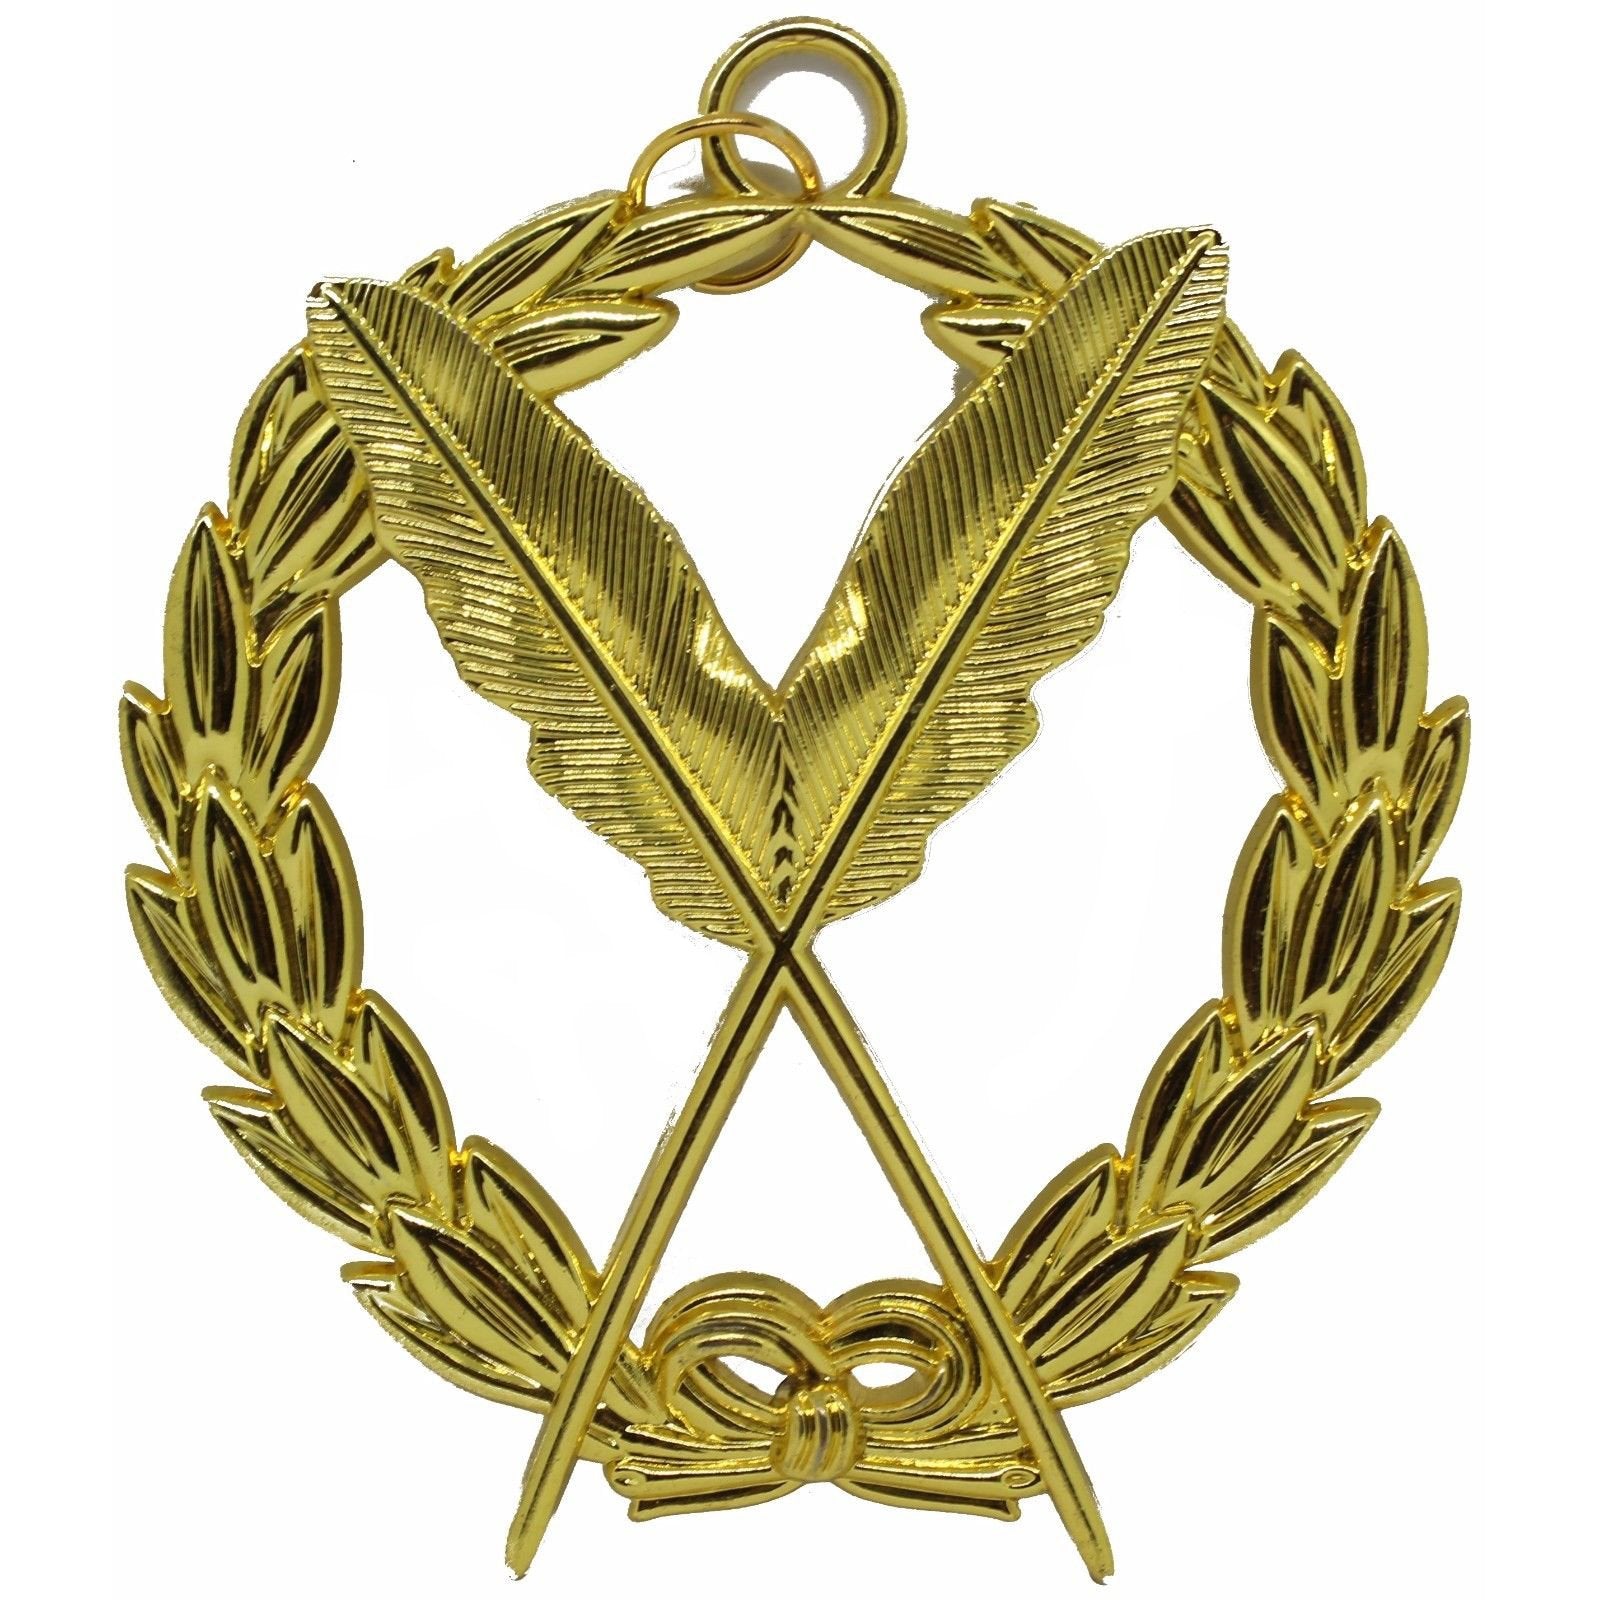 Grand Secretary Deacon Blue Lodge Officer Collar Jewel - Gold Metal - Bricks Masons